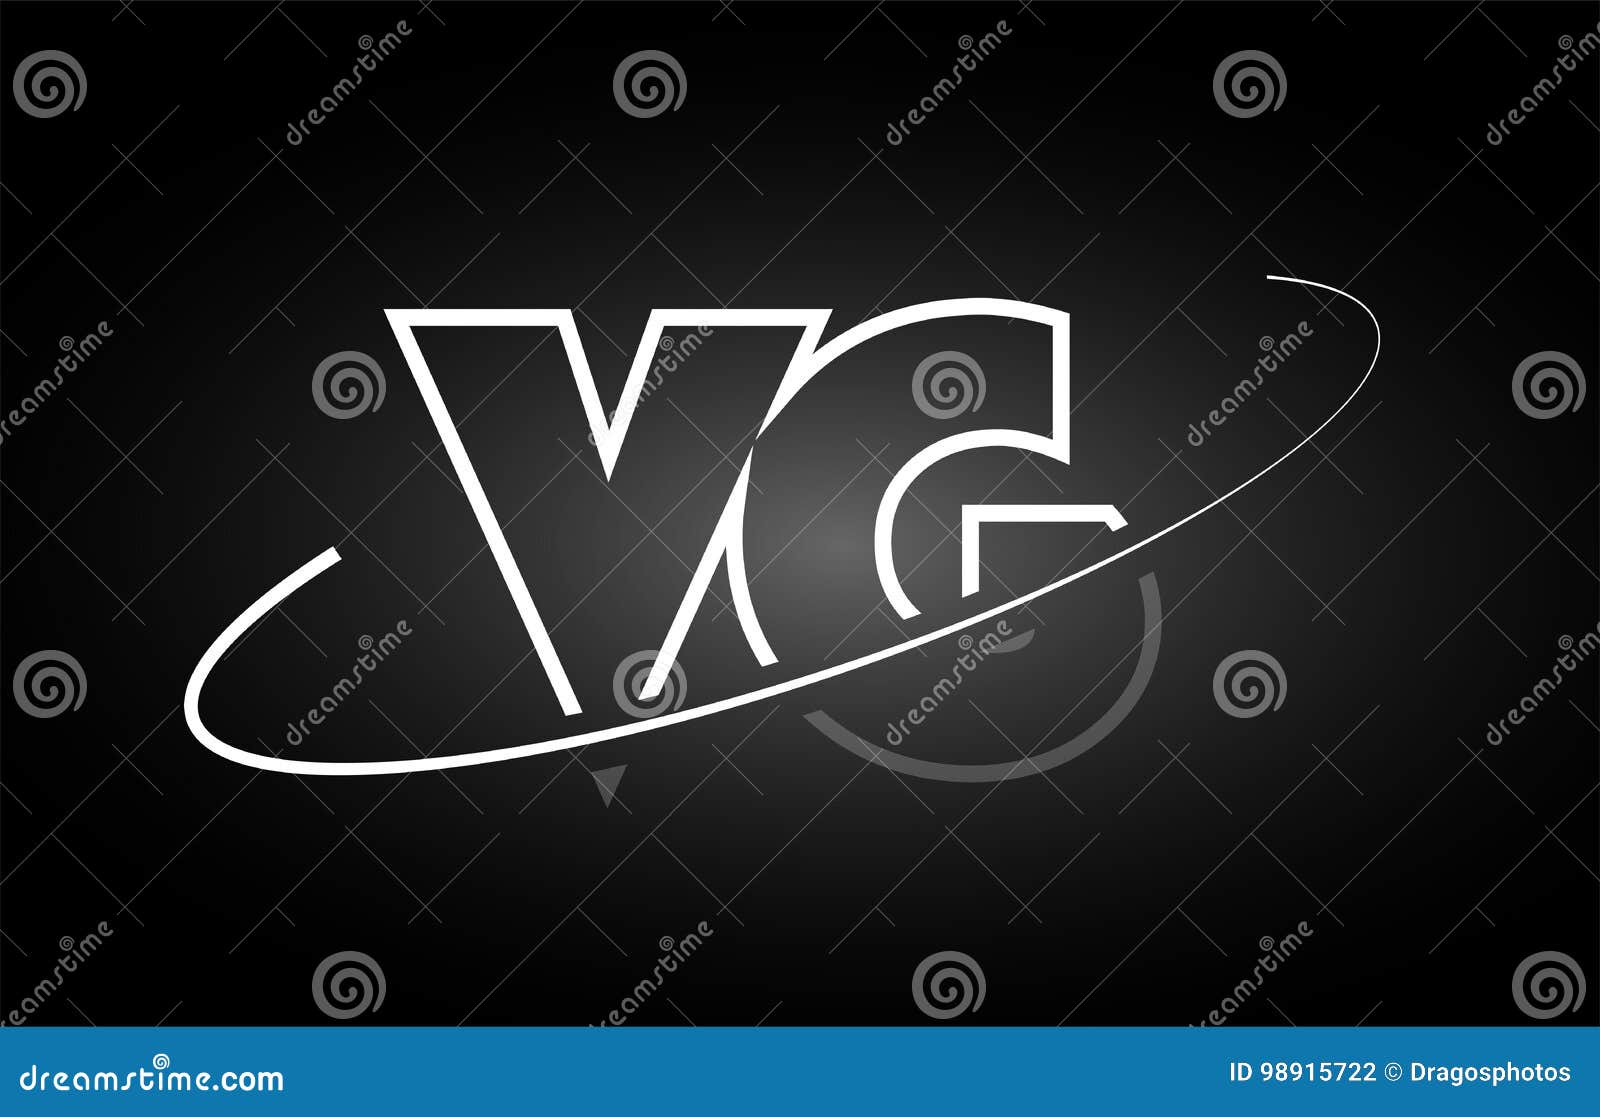 Bv vg. Логотип VG. Логотип ВГ. VG logo Design. V VG.